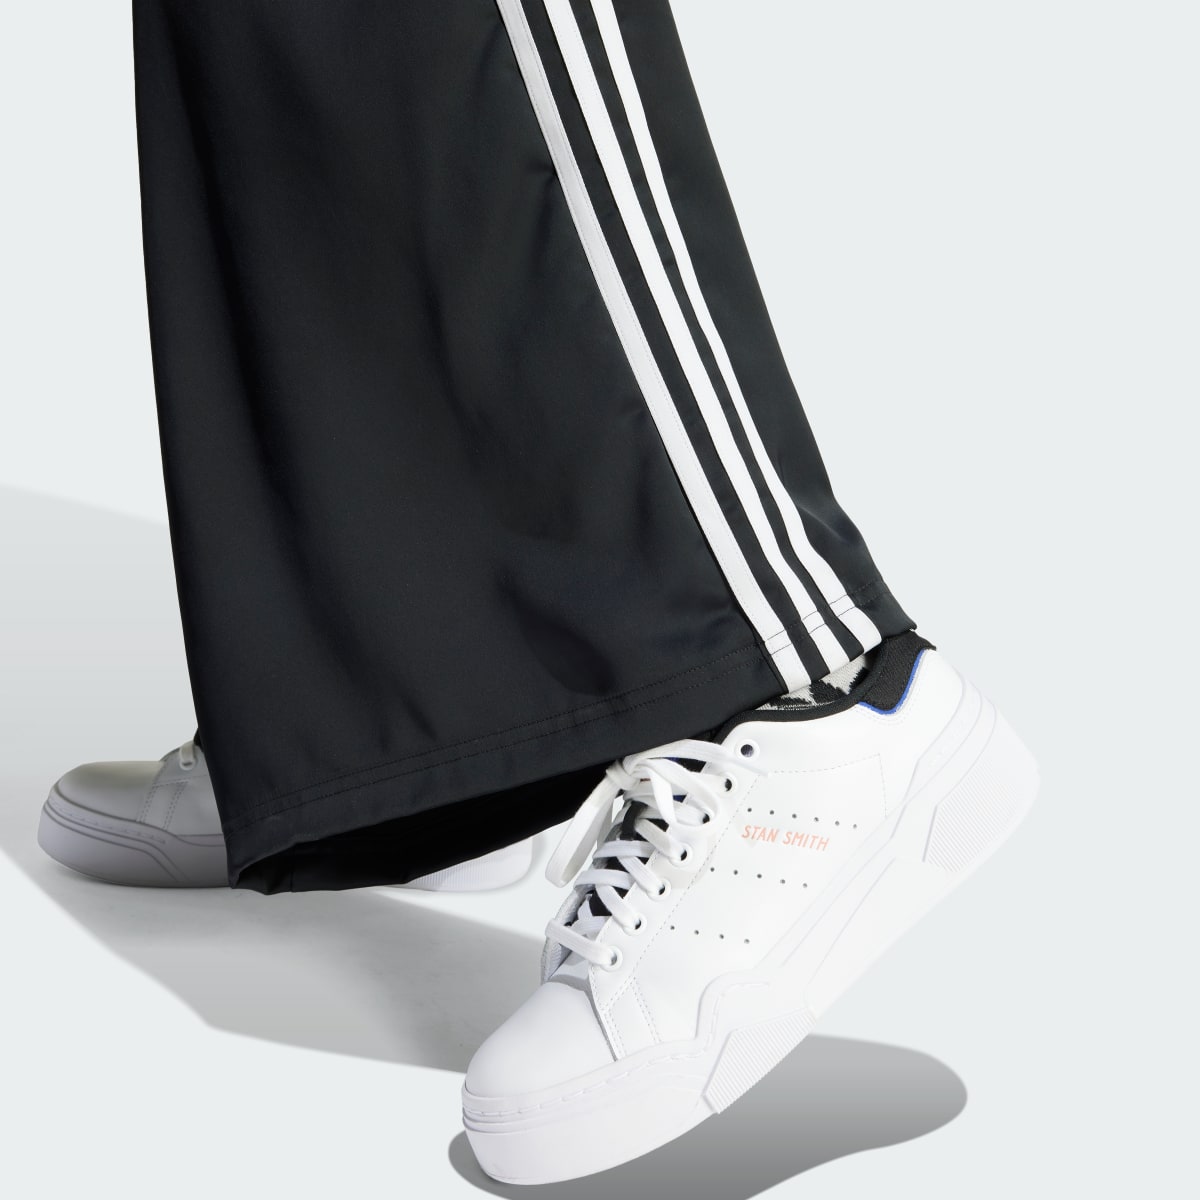 Adidas Pantalon de survêtement large satin. 6